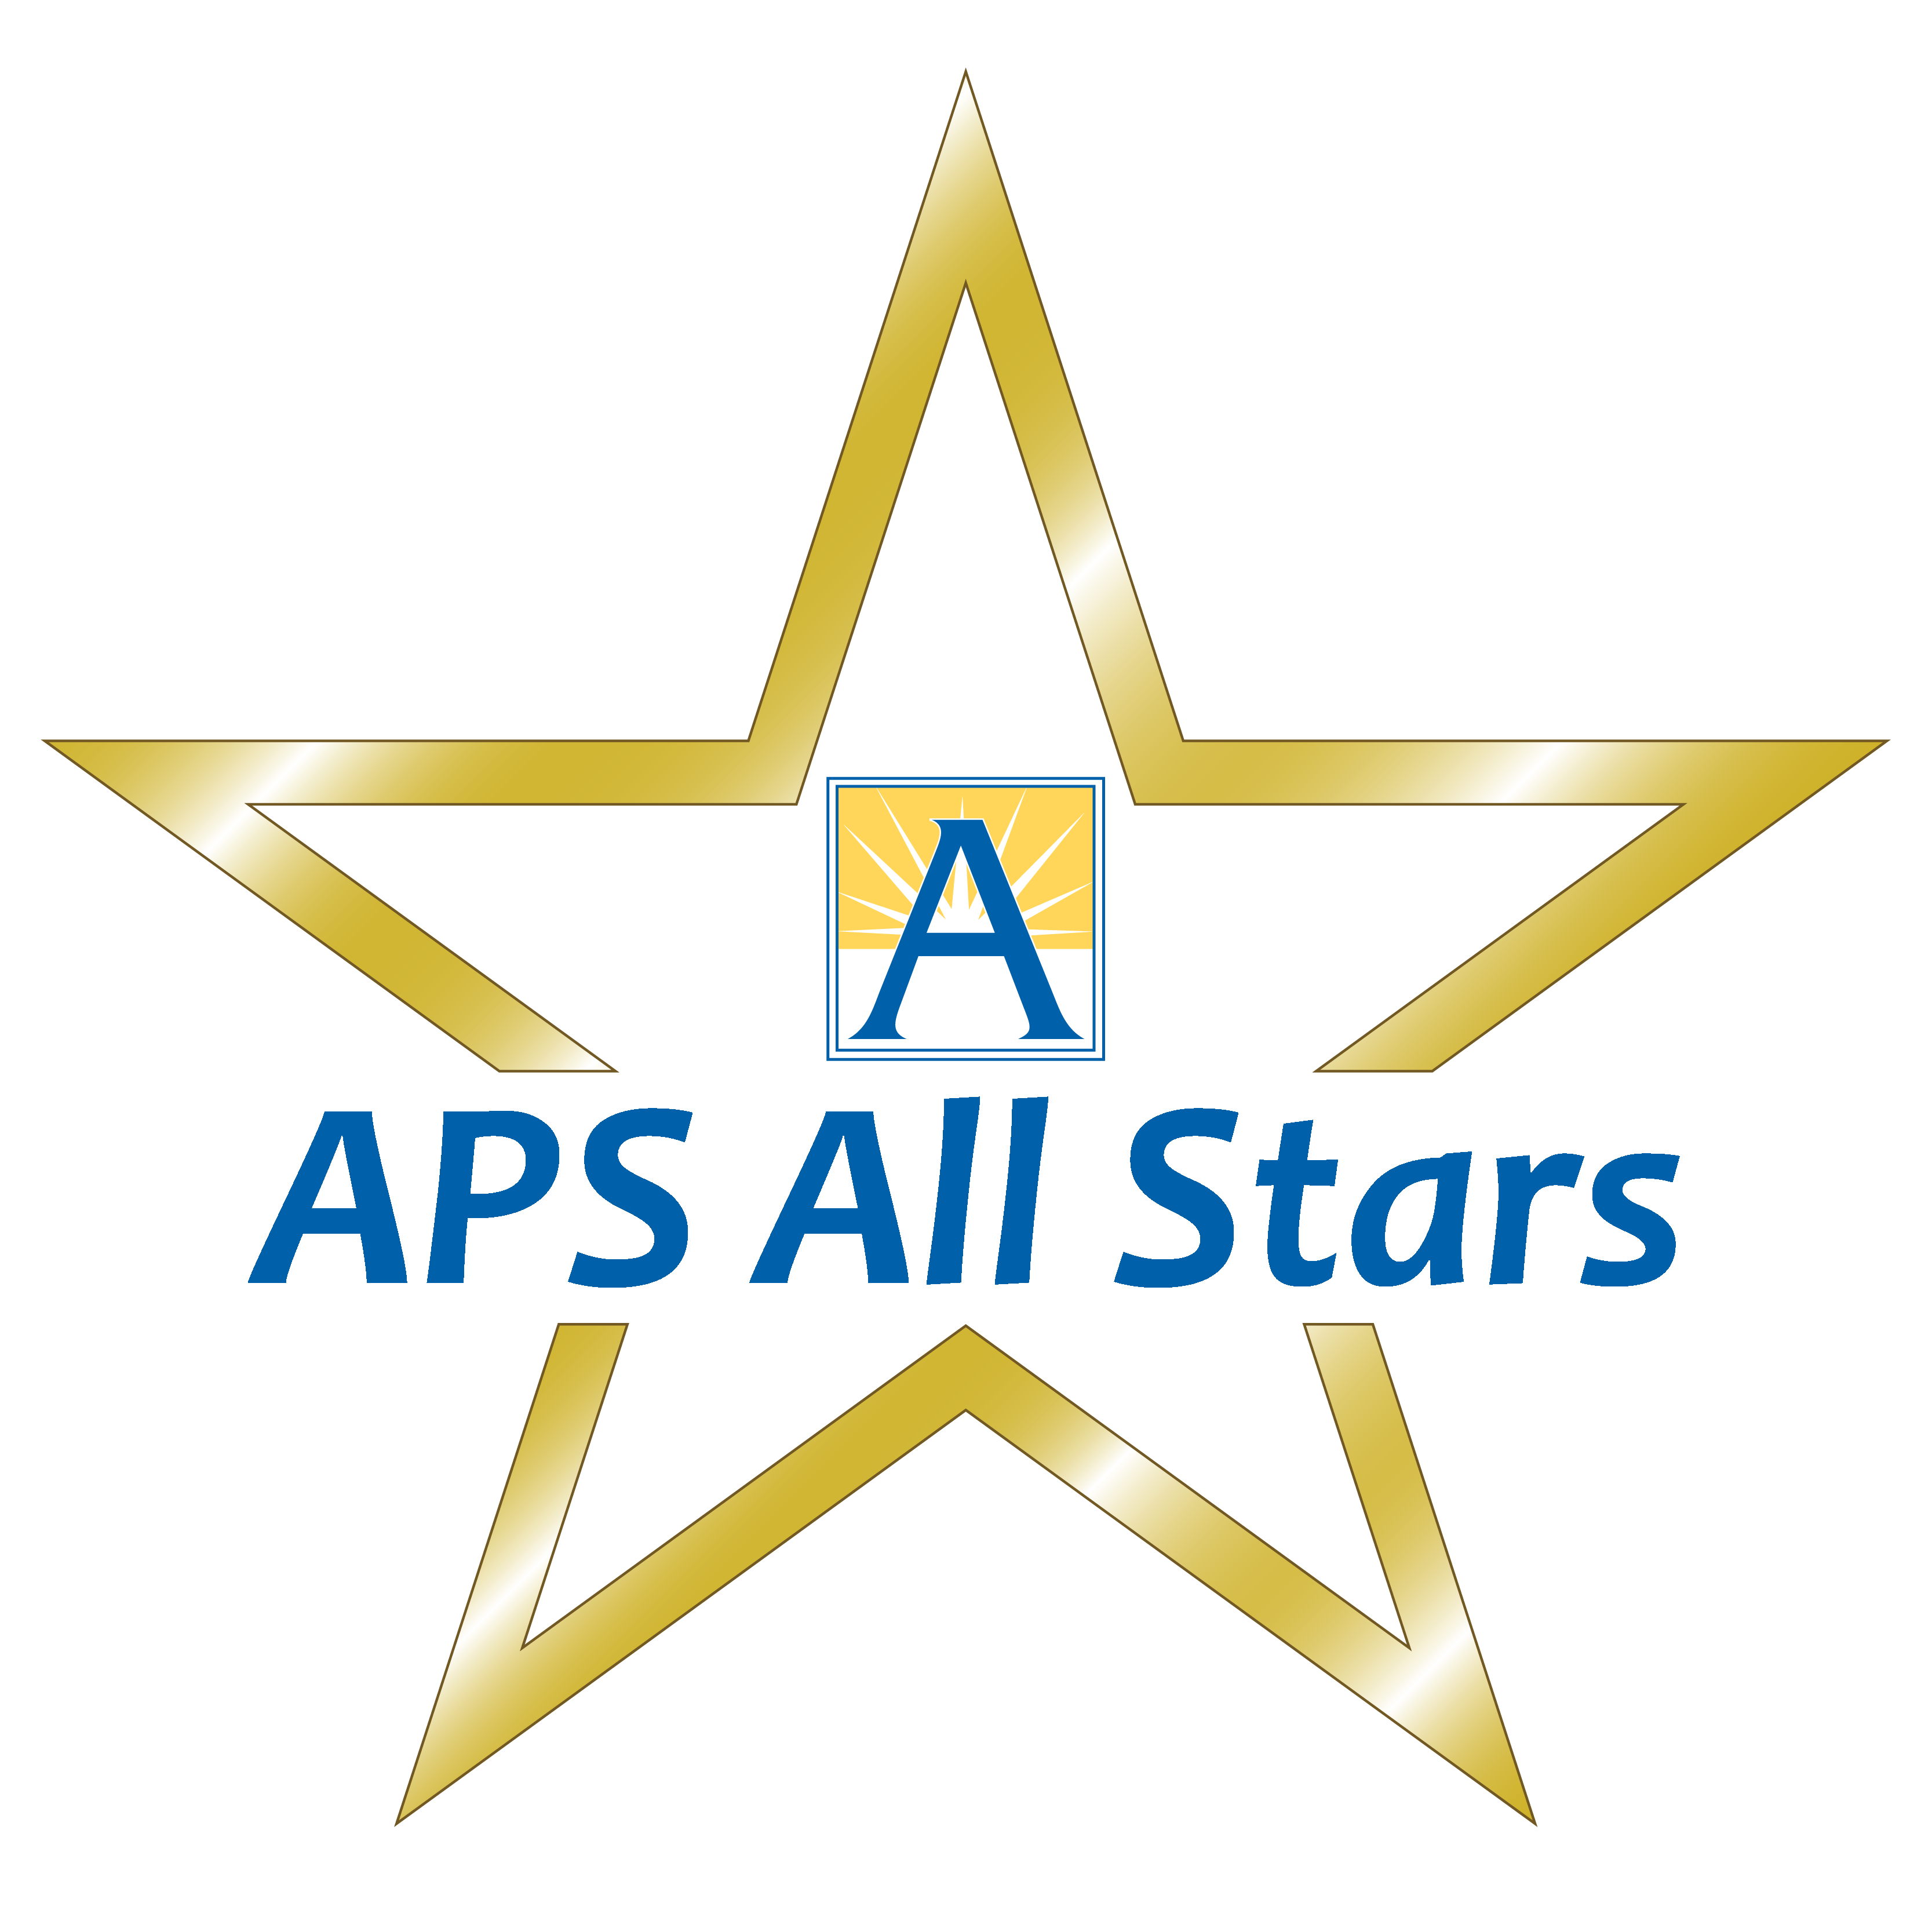 APS All Stars star logo